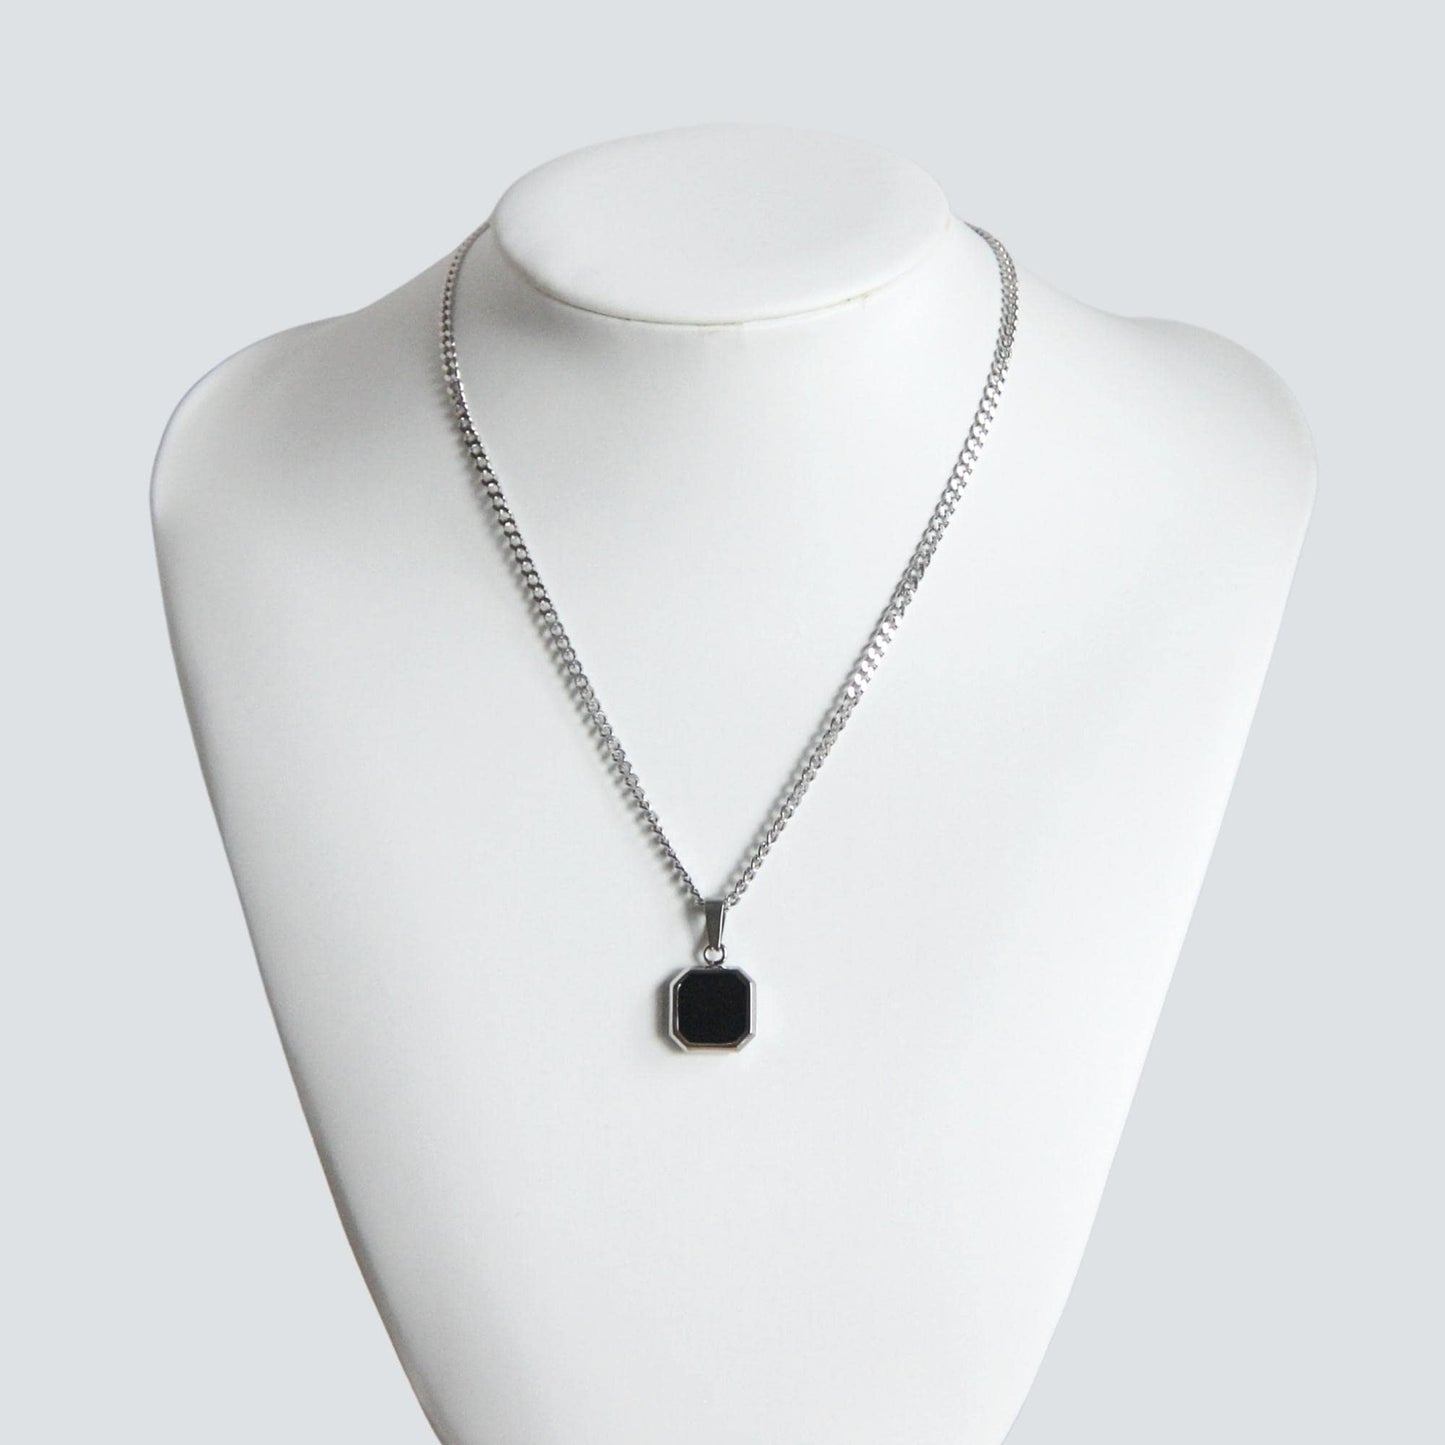 Silver Black Square Pendant Necklace 3mm Curb Chain For Men or Women - Necklace - Boutique Wear RENN